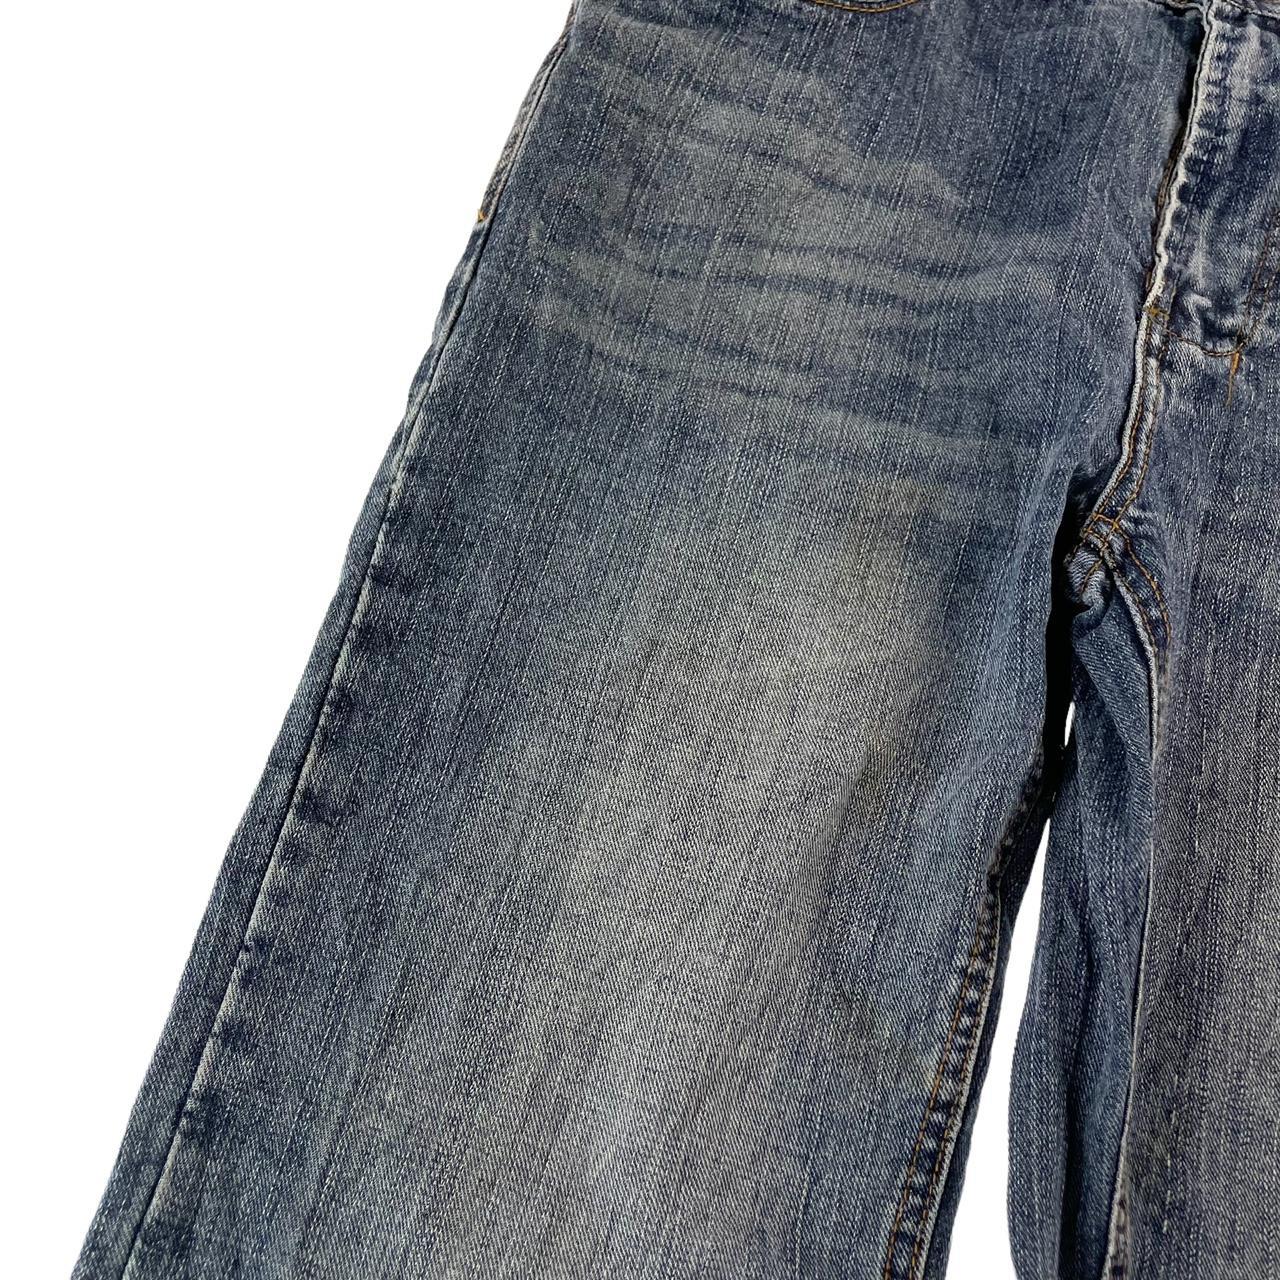 Vintage Dragon Japanese denim jeans trousers... - Depop